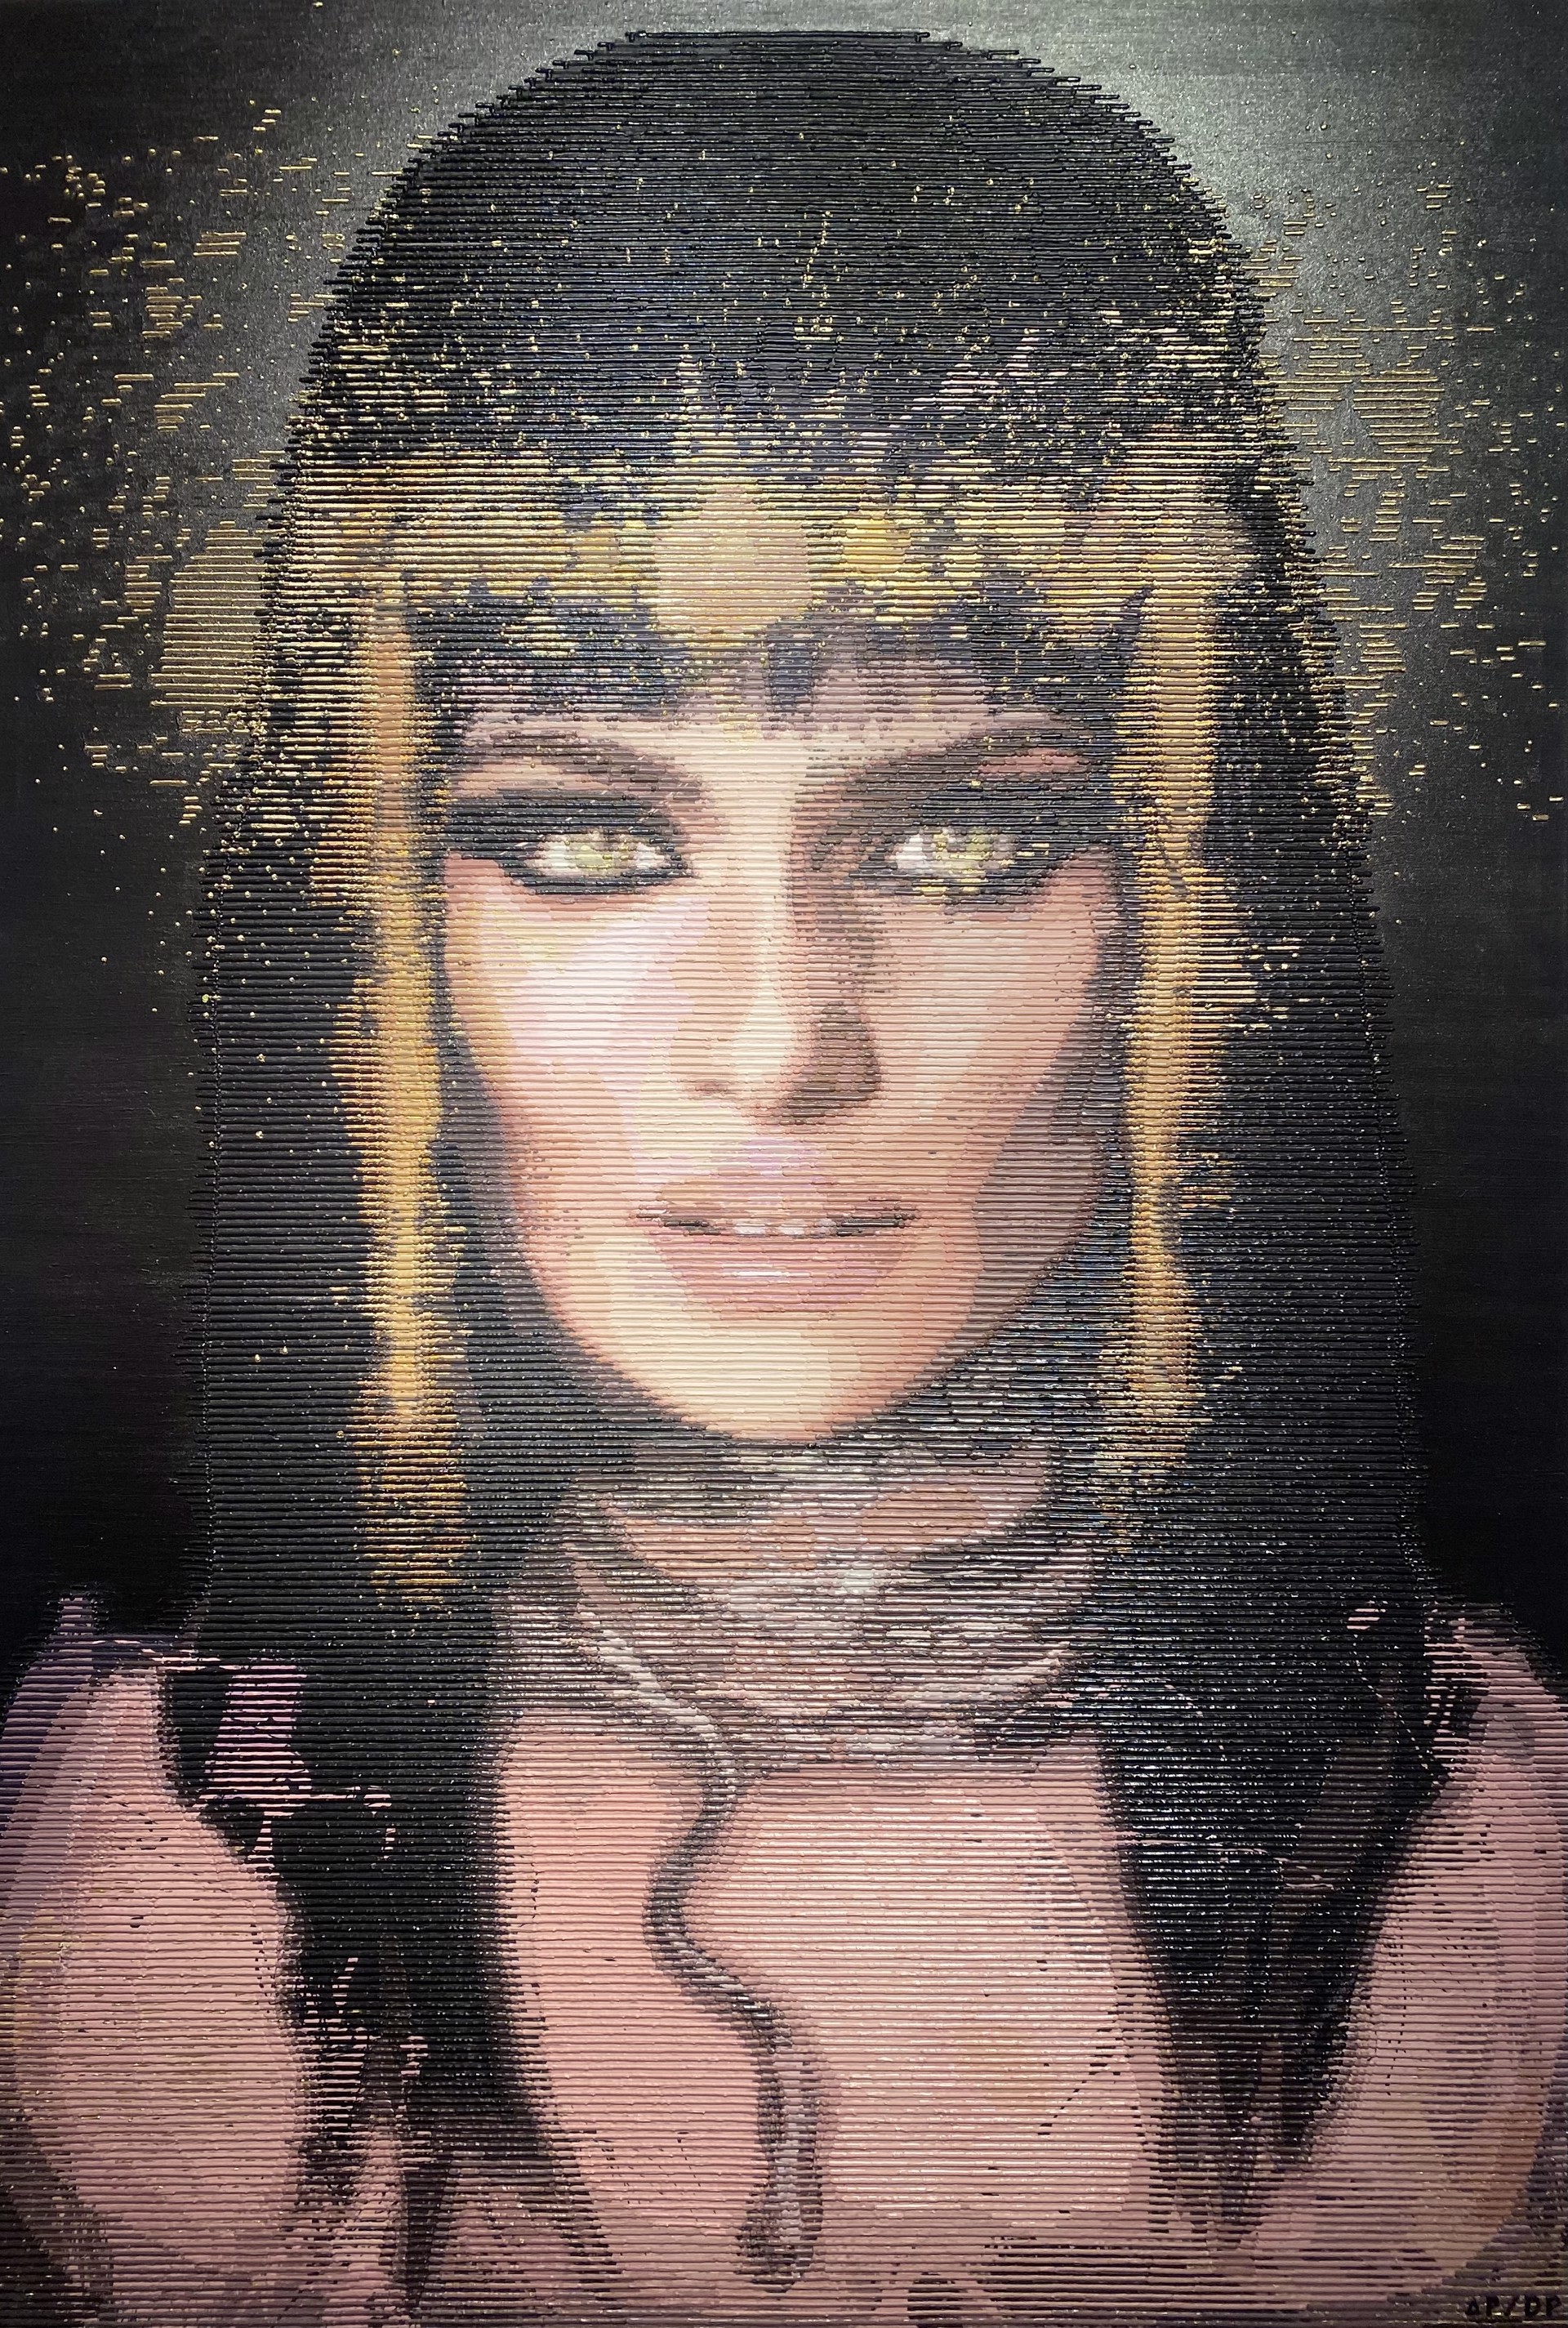 Cleopatra by Alea Pinar Du Pre